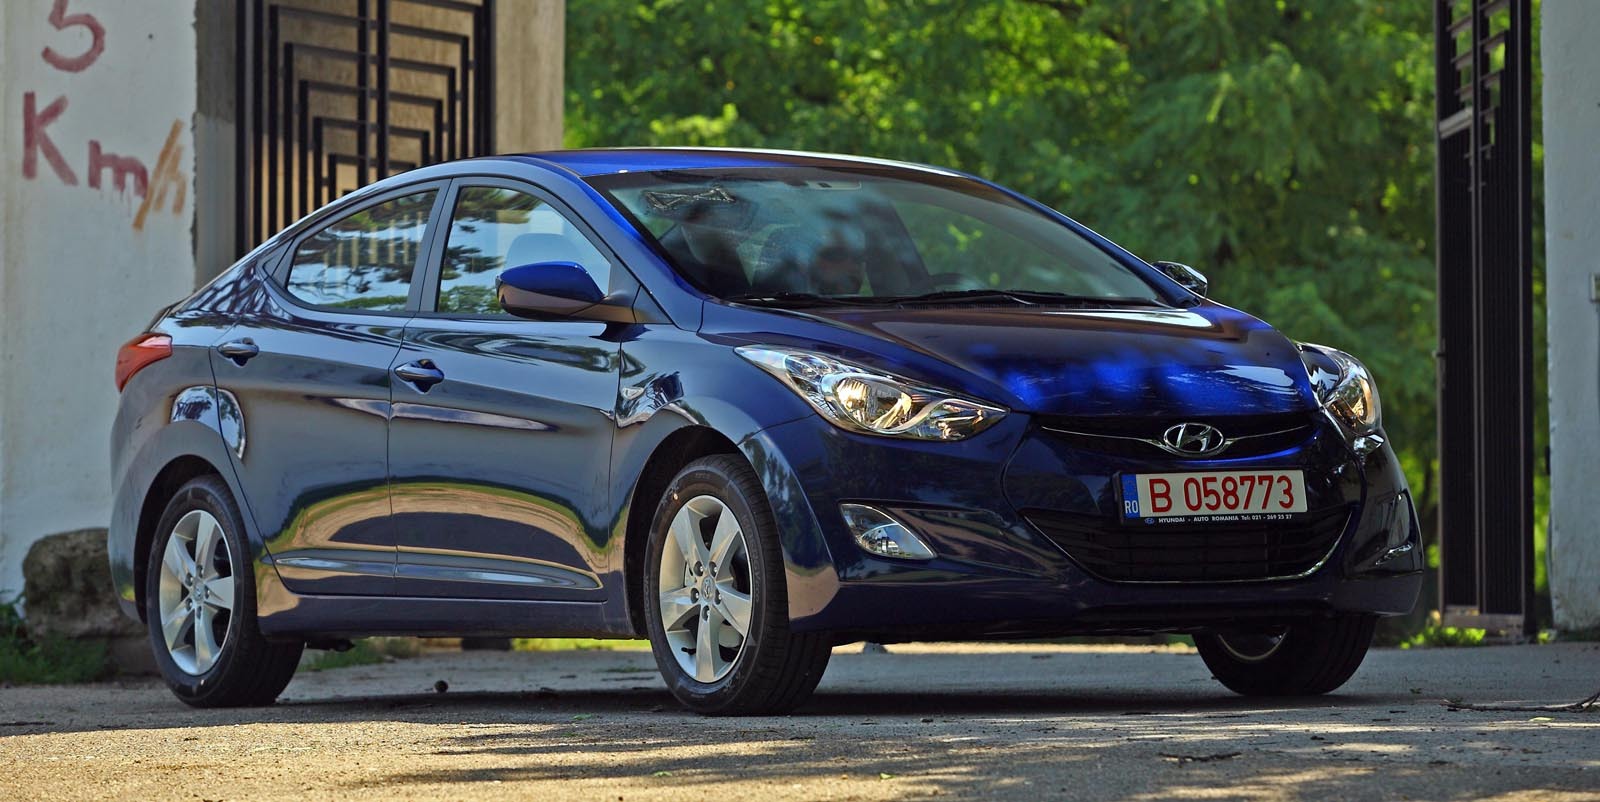 Hyundai Elantra porneste de la 14.450 euro, iar versiunea de top costa 15.690 euro